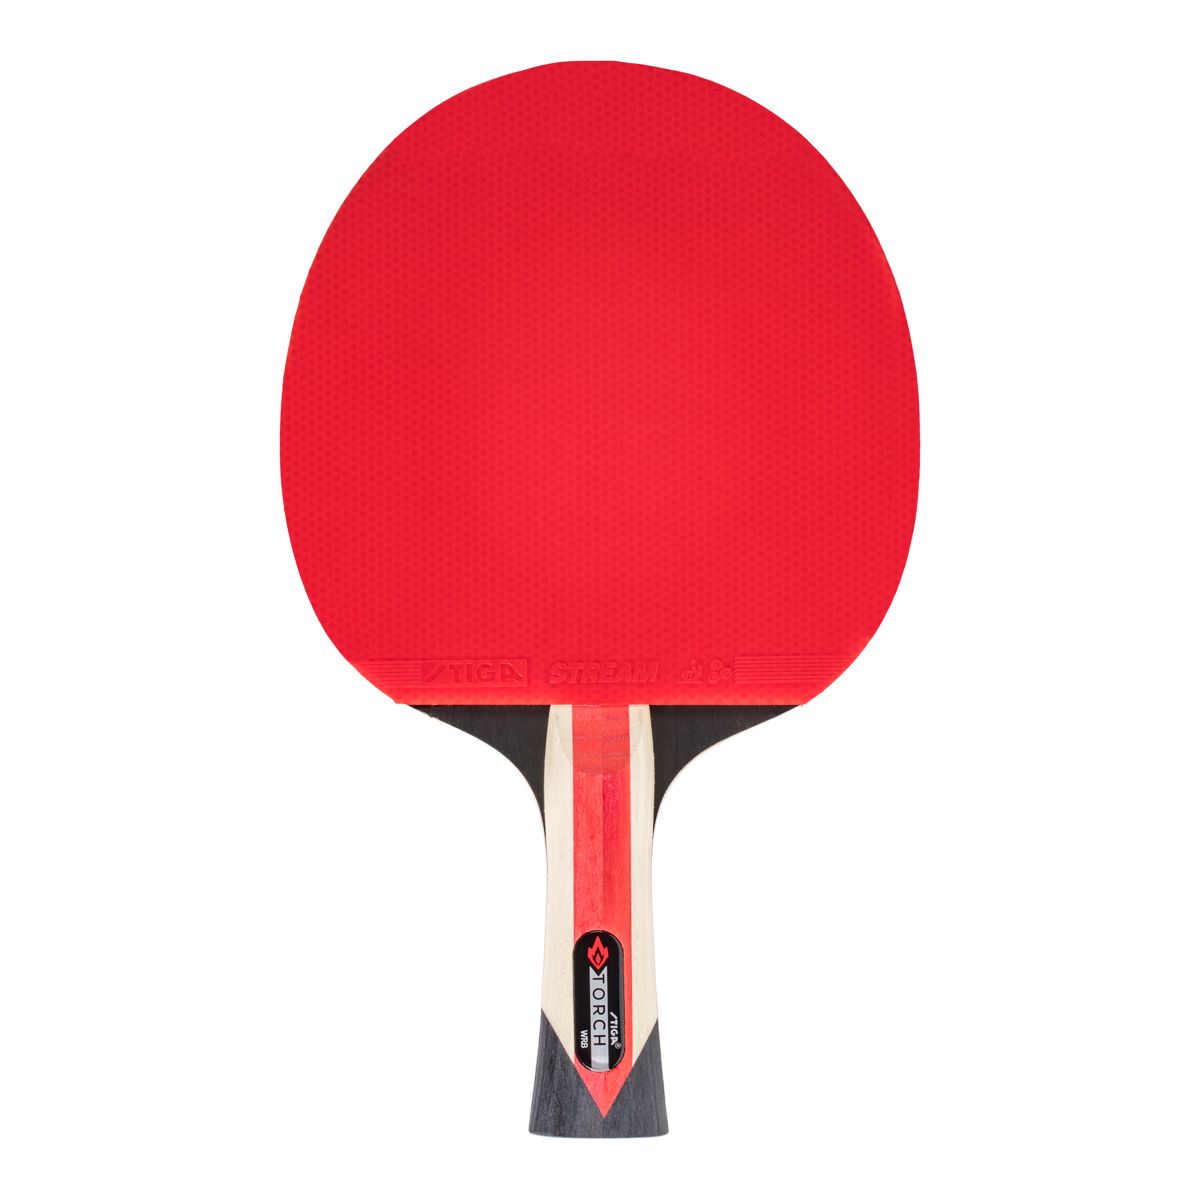 Image of Escalade Stiga Torch Table Tennis Racket